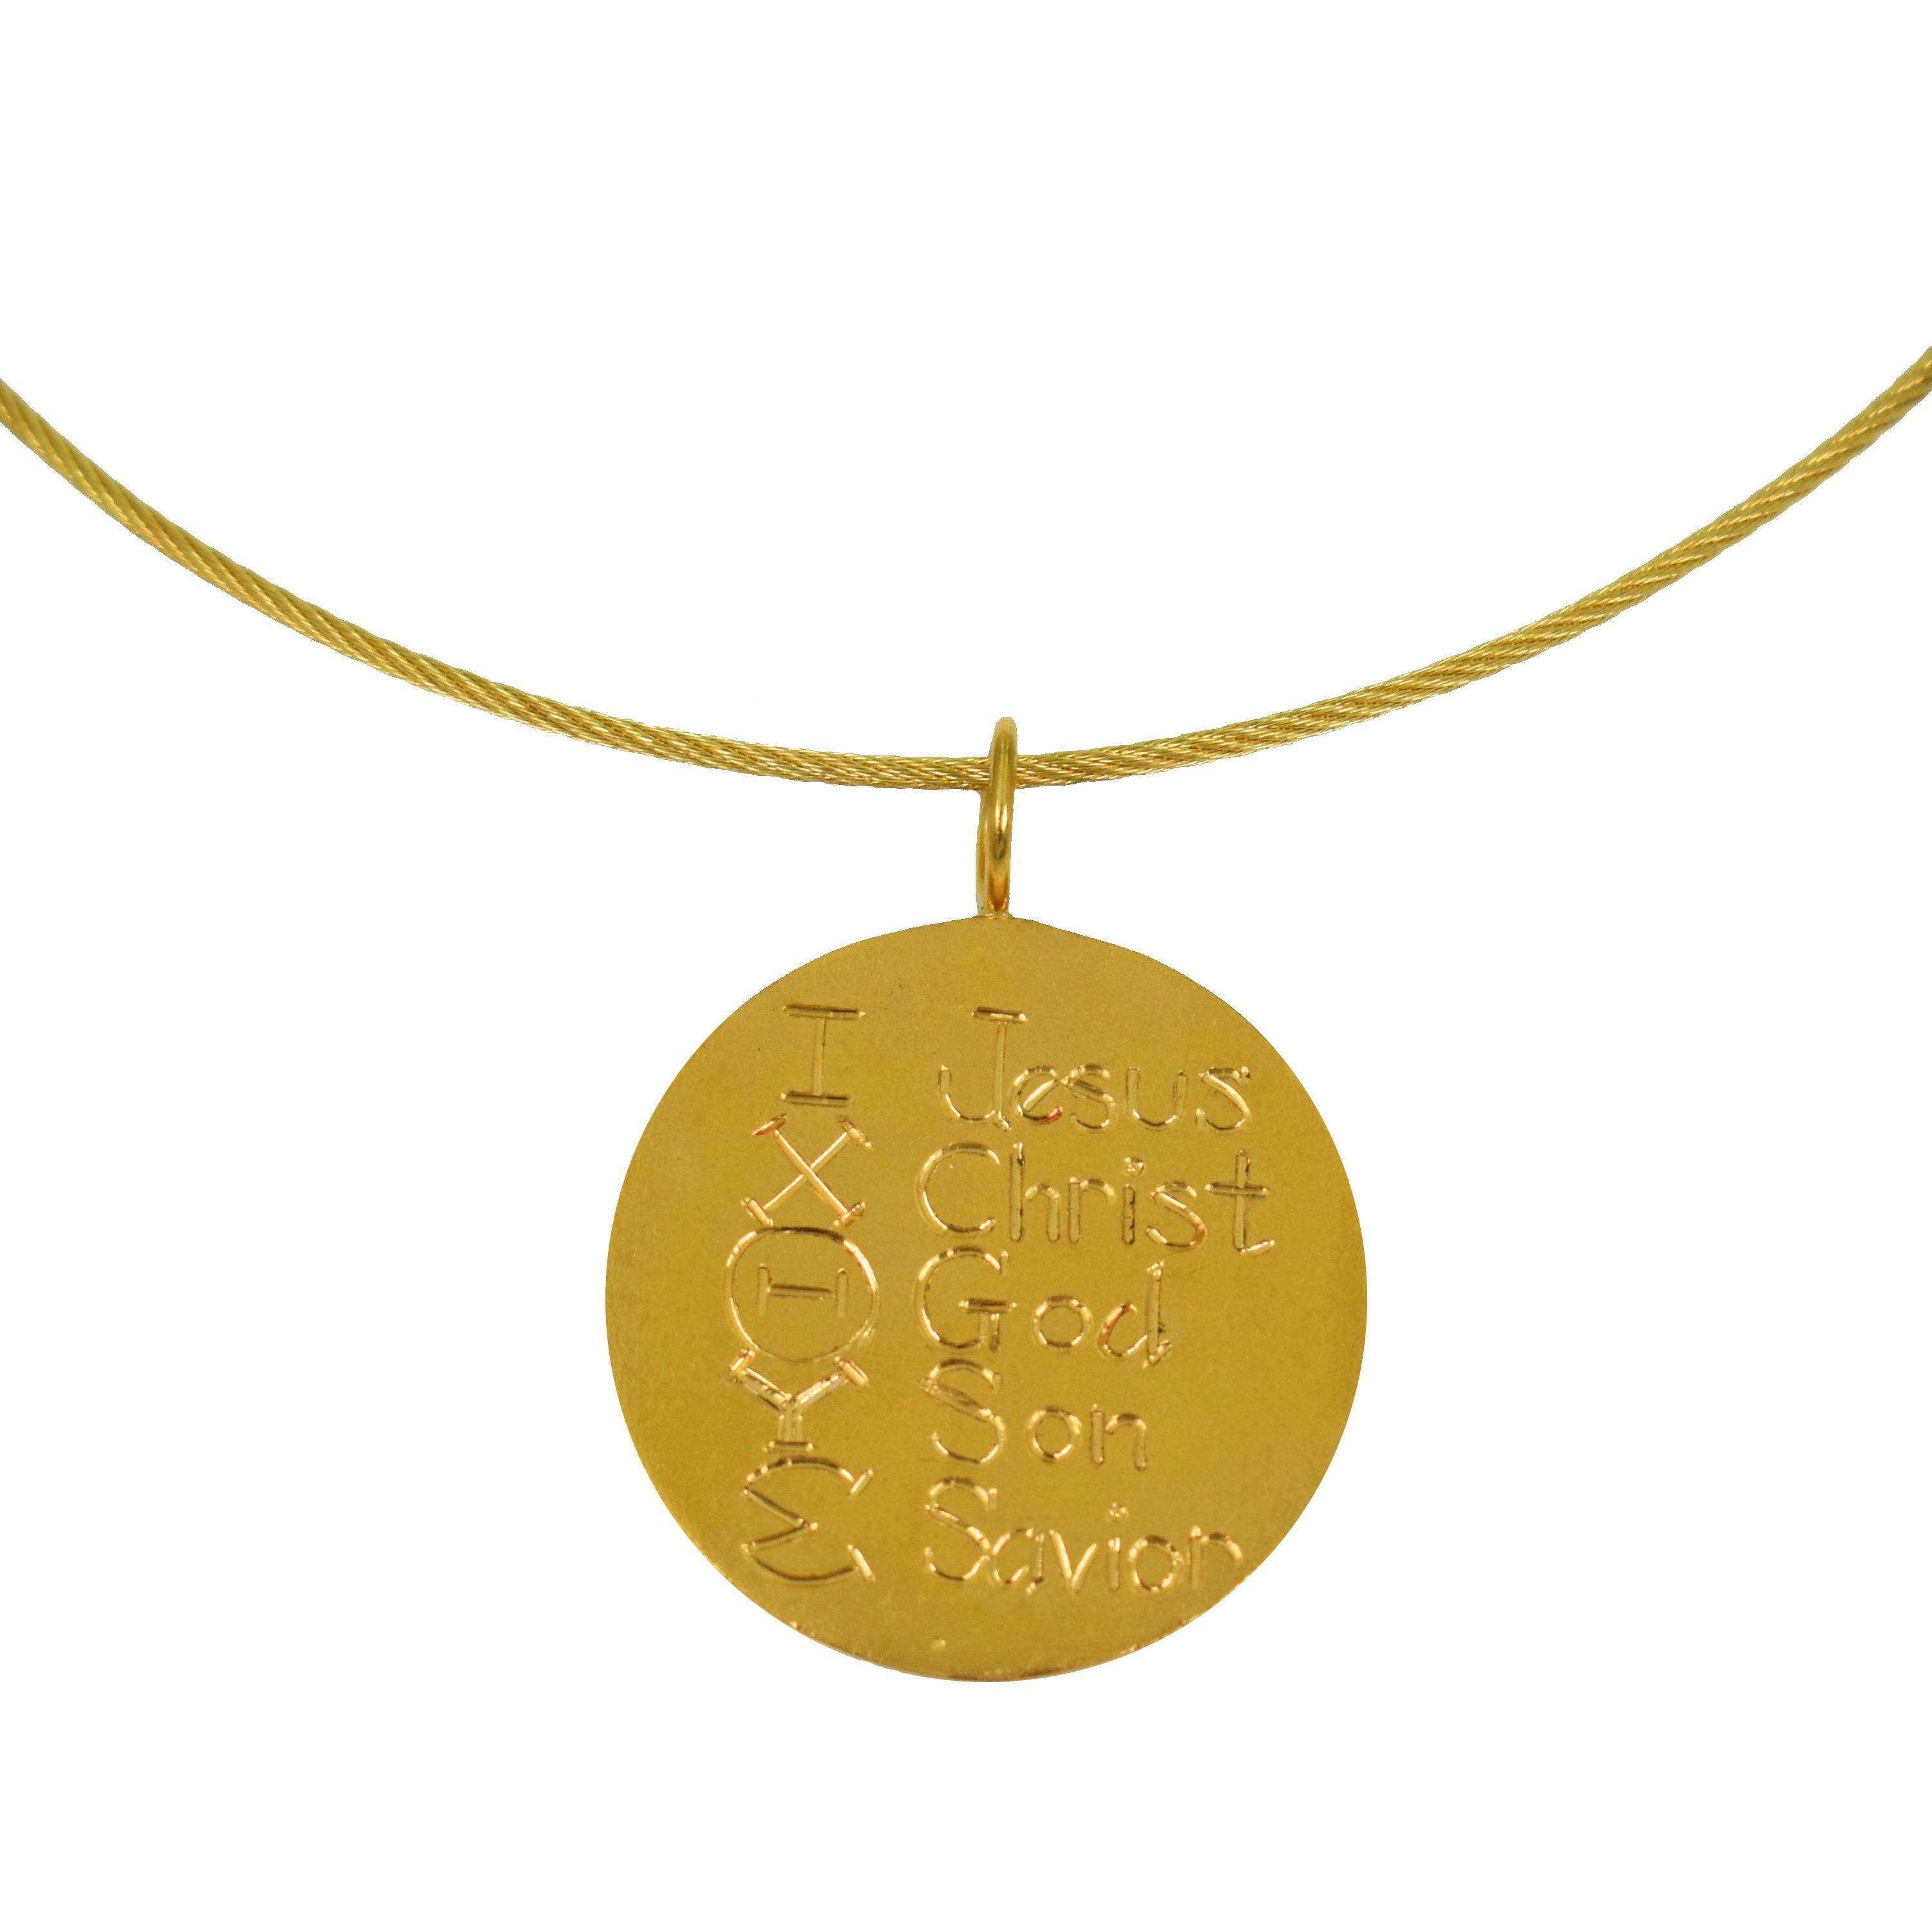 Contemporain Collier avec pendentif en or 22 carats à breloques Ixthus en vente